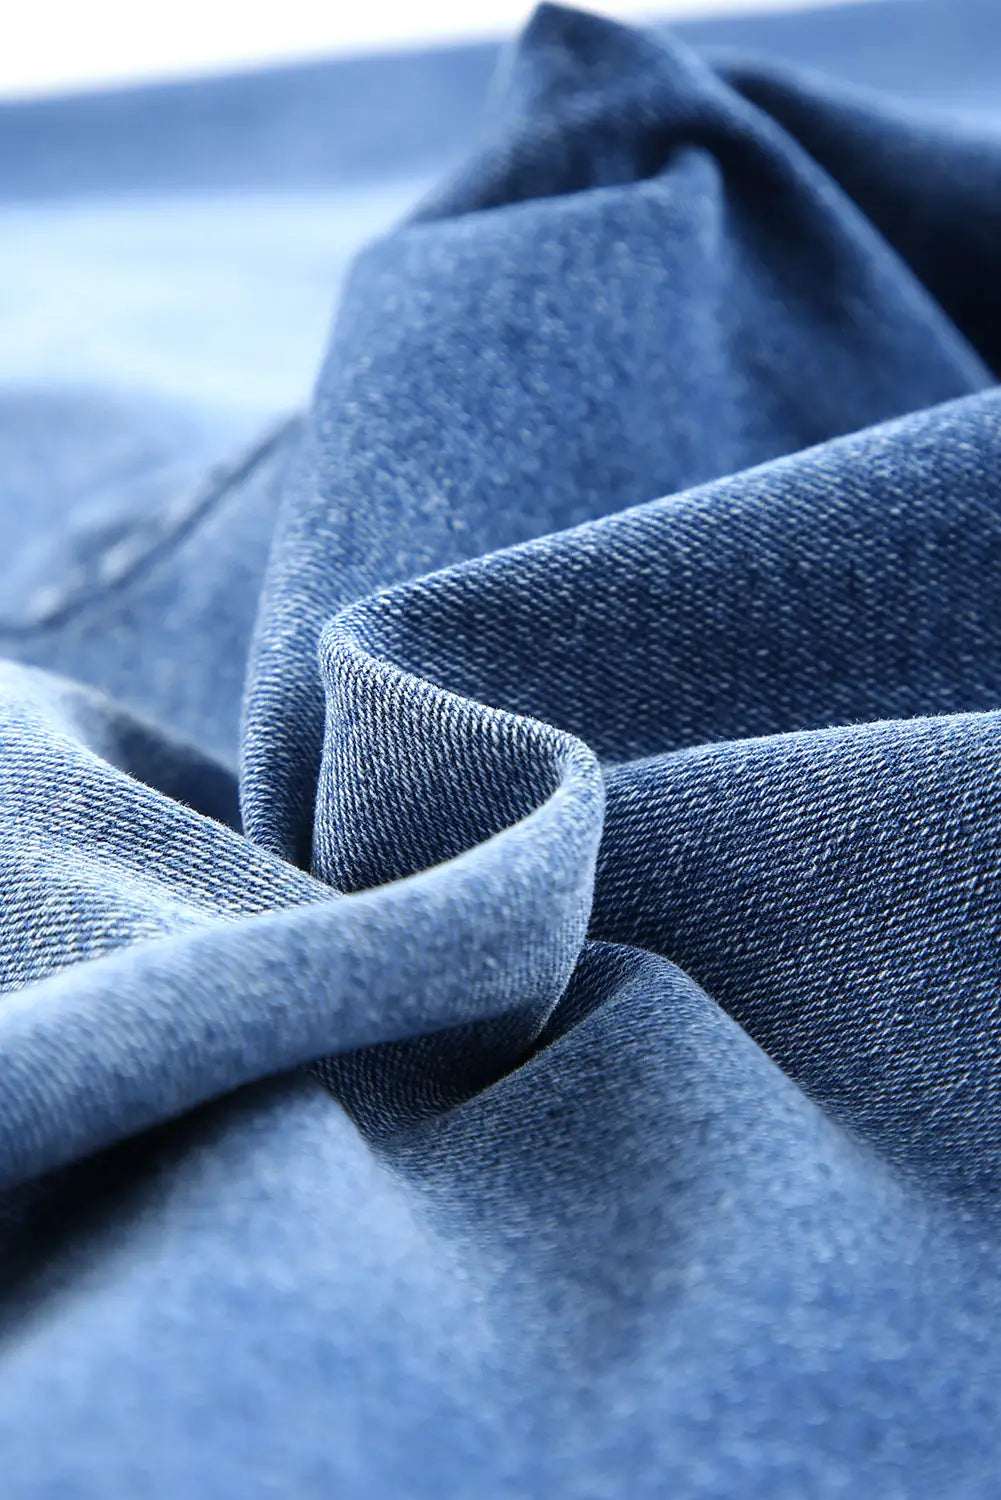 Sky blue acid wash roll-up edge bermuda short jeans - denim shorts